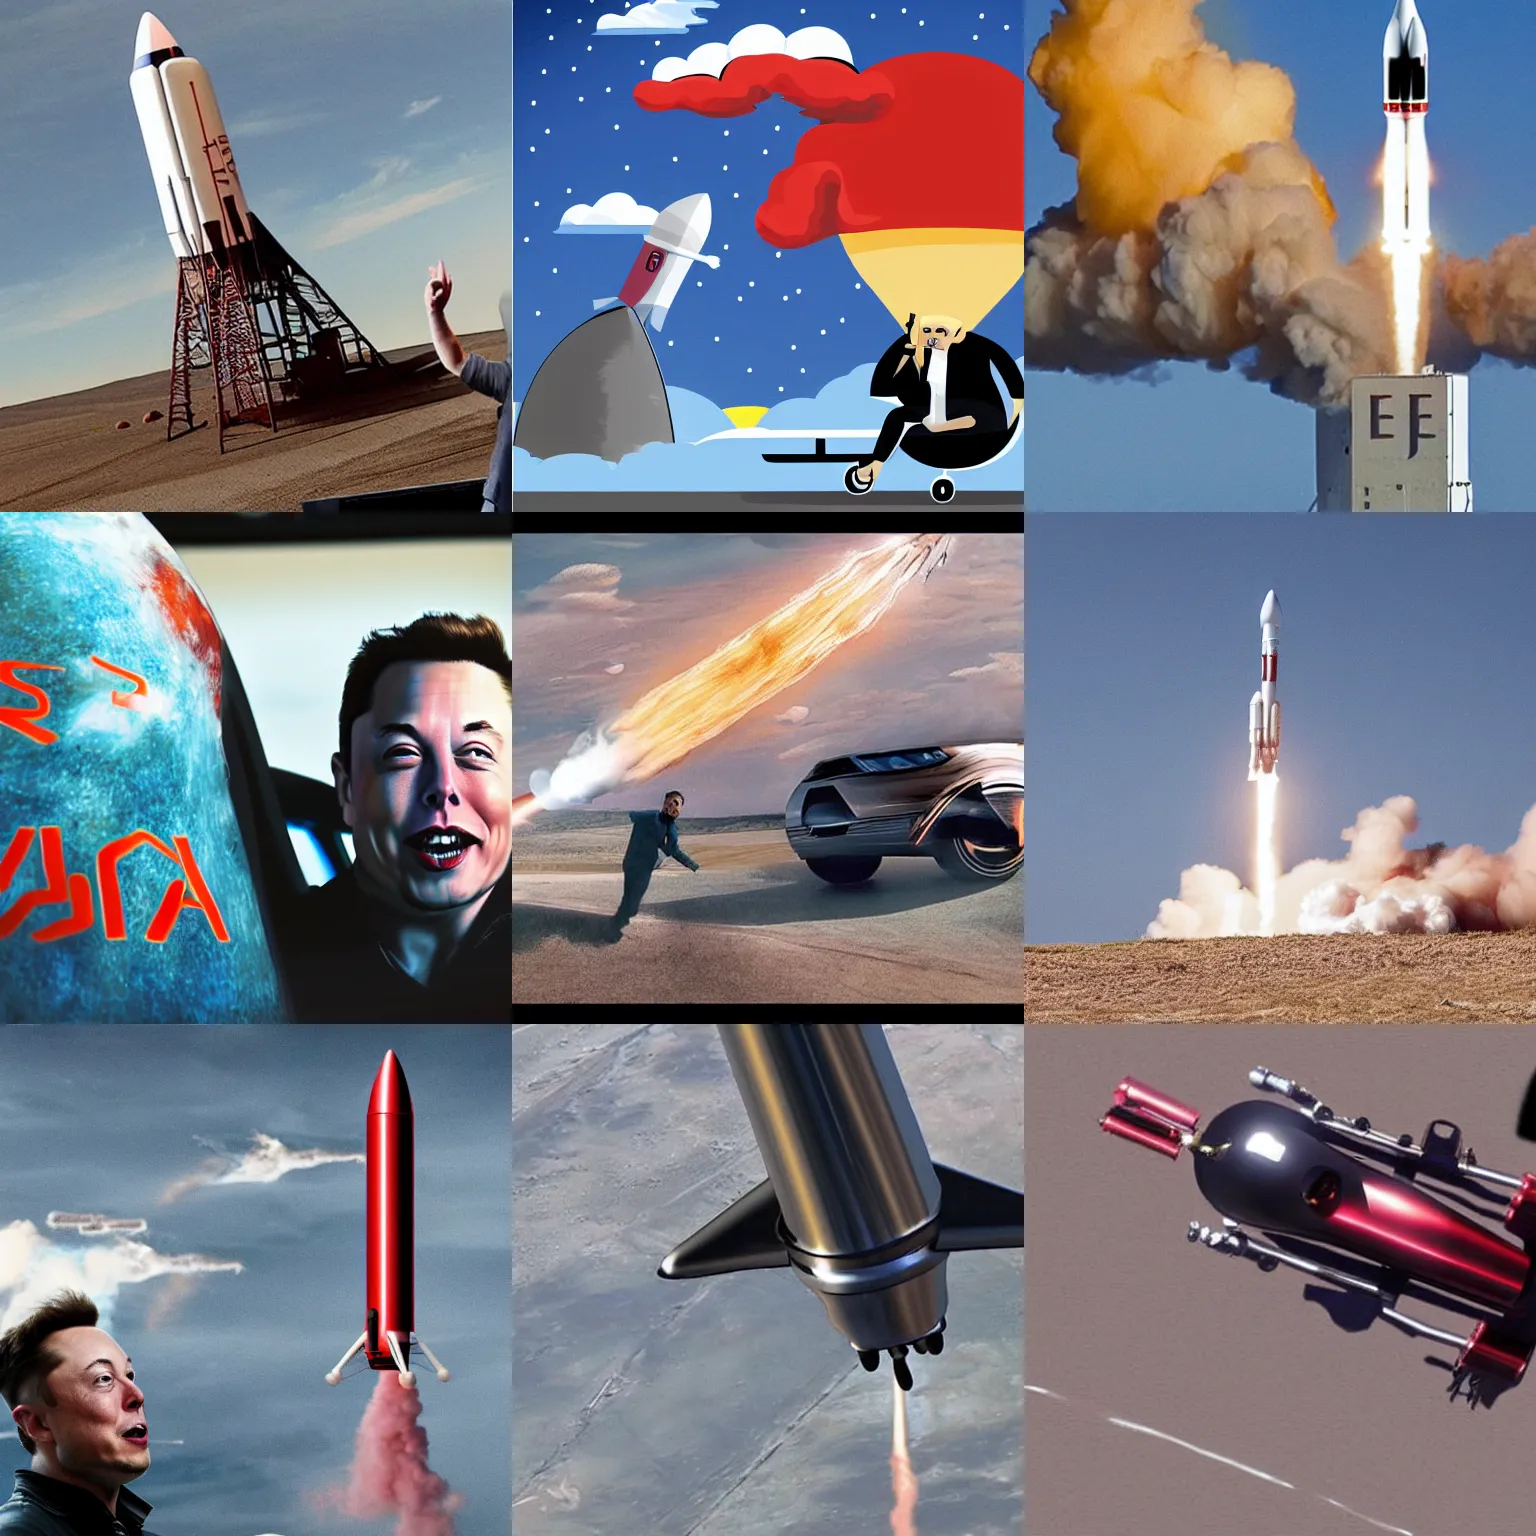 Prompt: artistic representation of elon musk riding a rocket